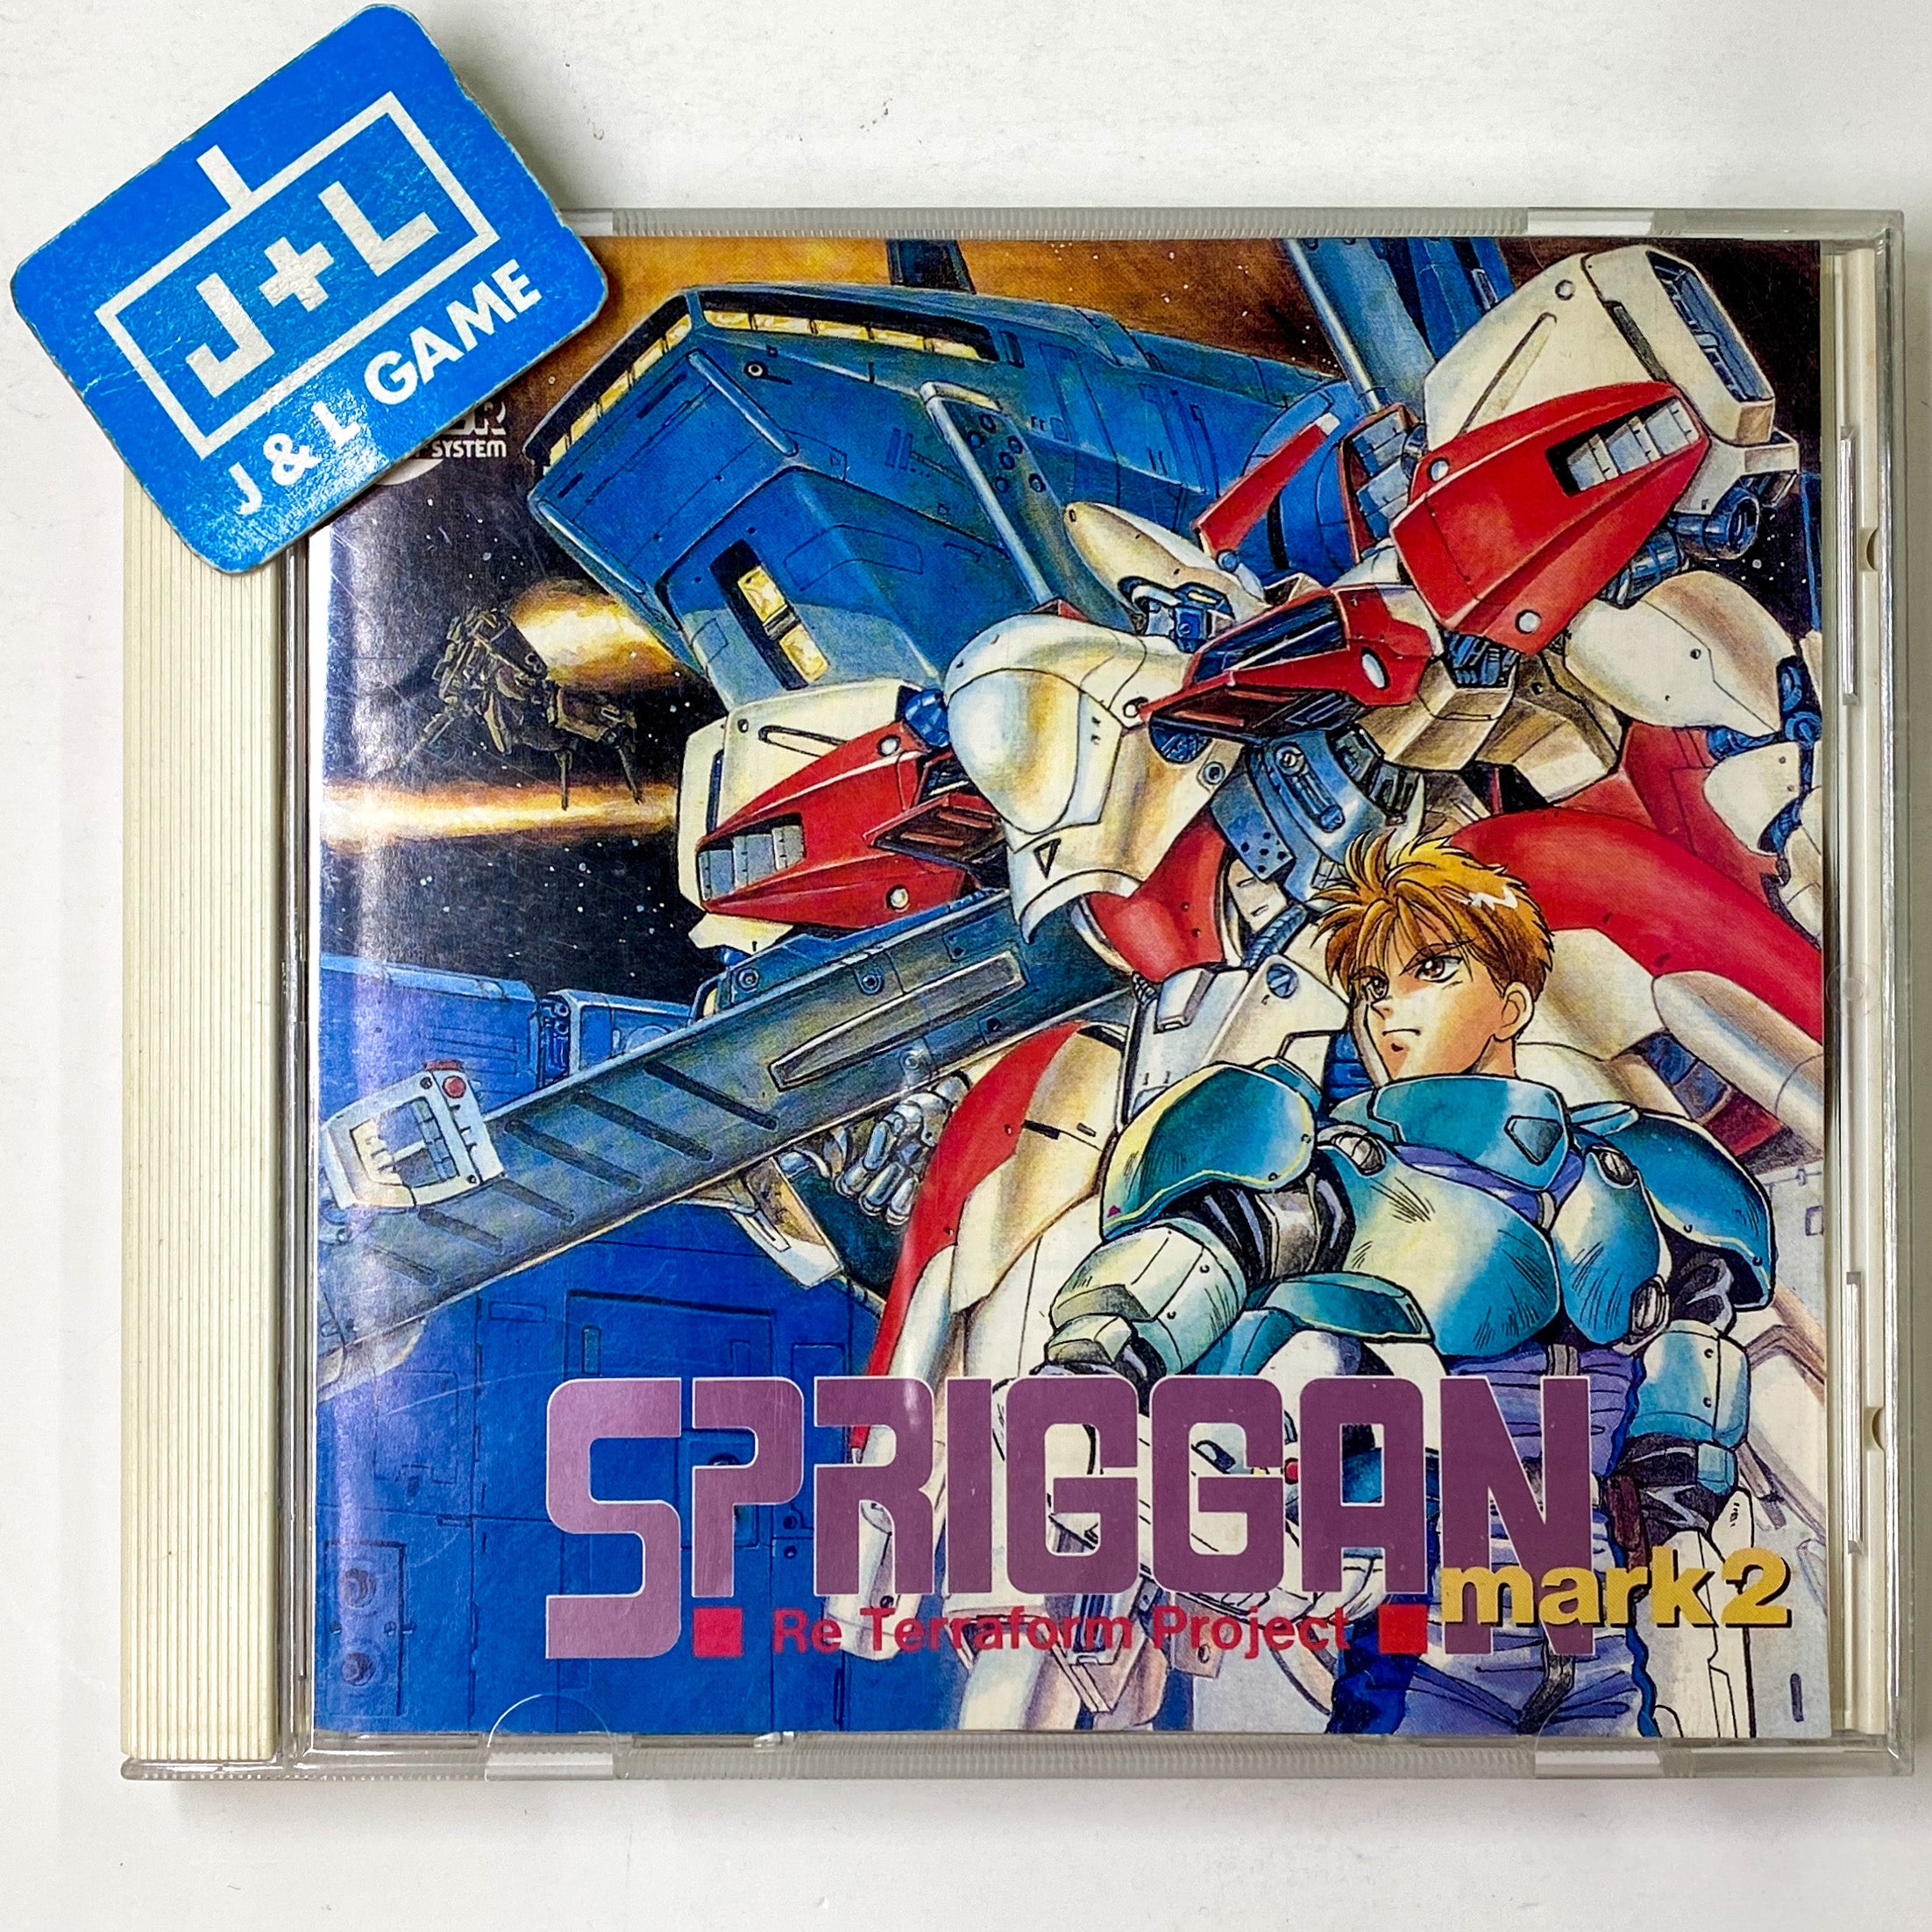 Spriggan Mark 2: Re-Terraform Project - Turbo CD (Japanese Import) [Pre-Owned] Video Games Naxat Soft   